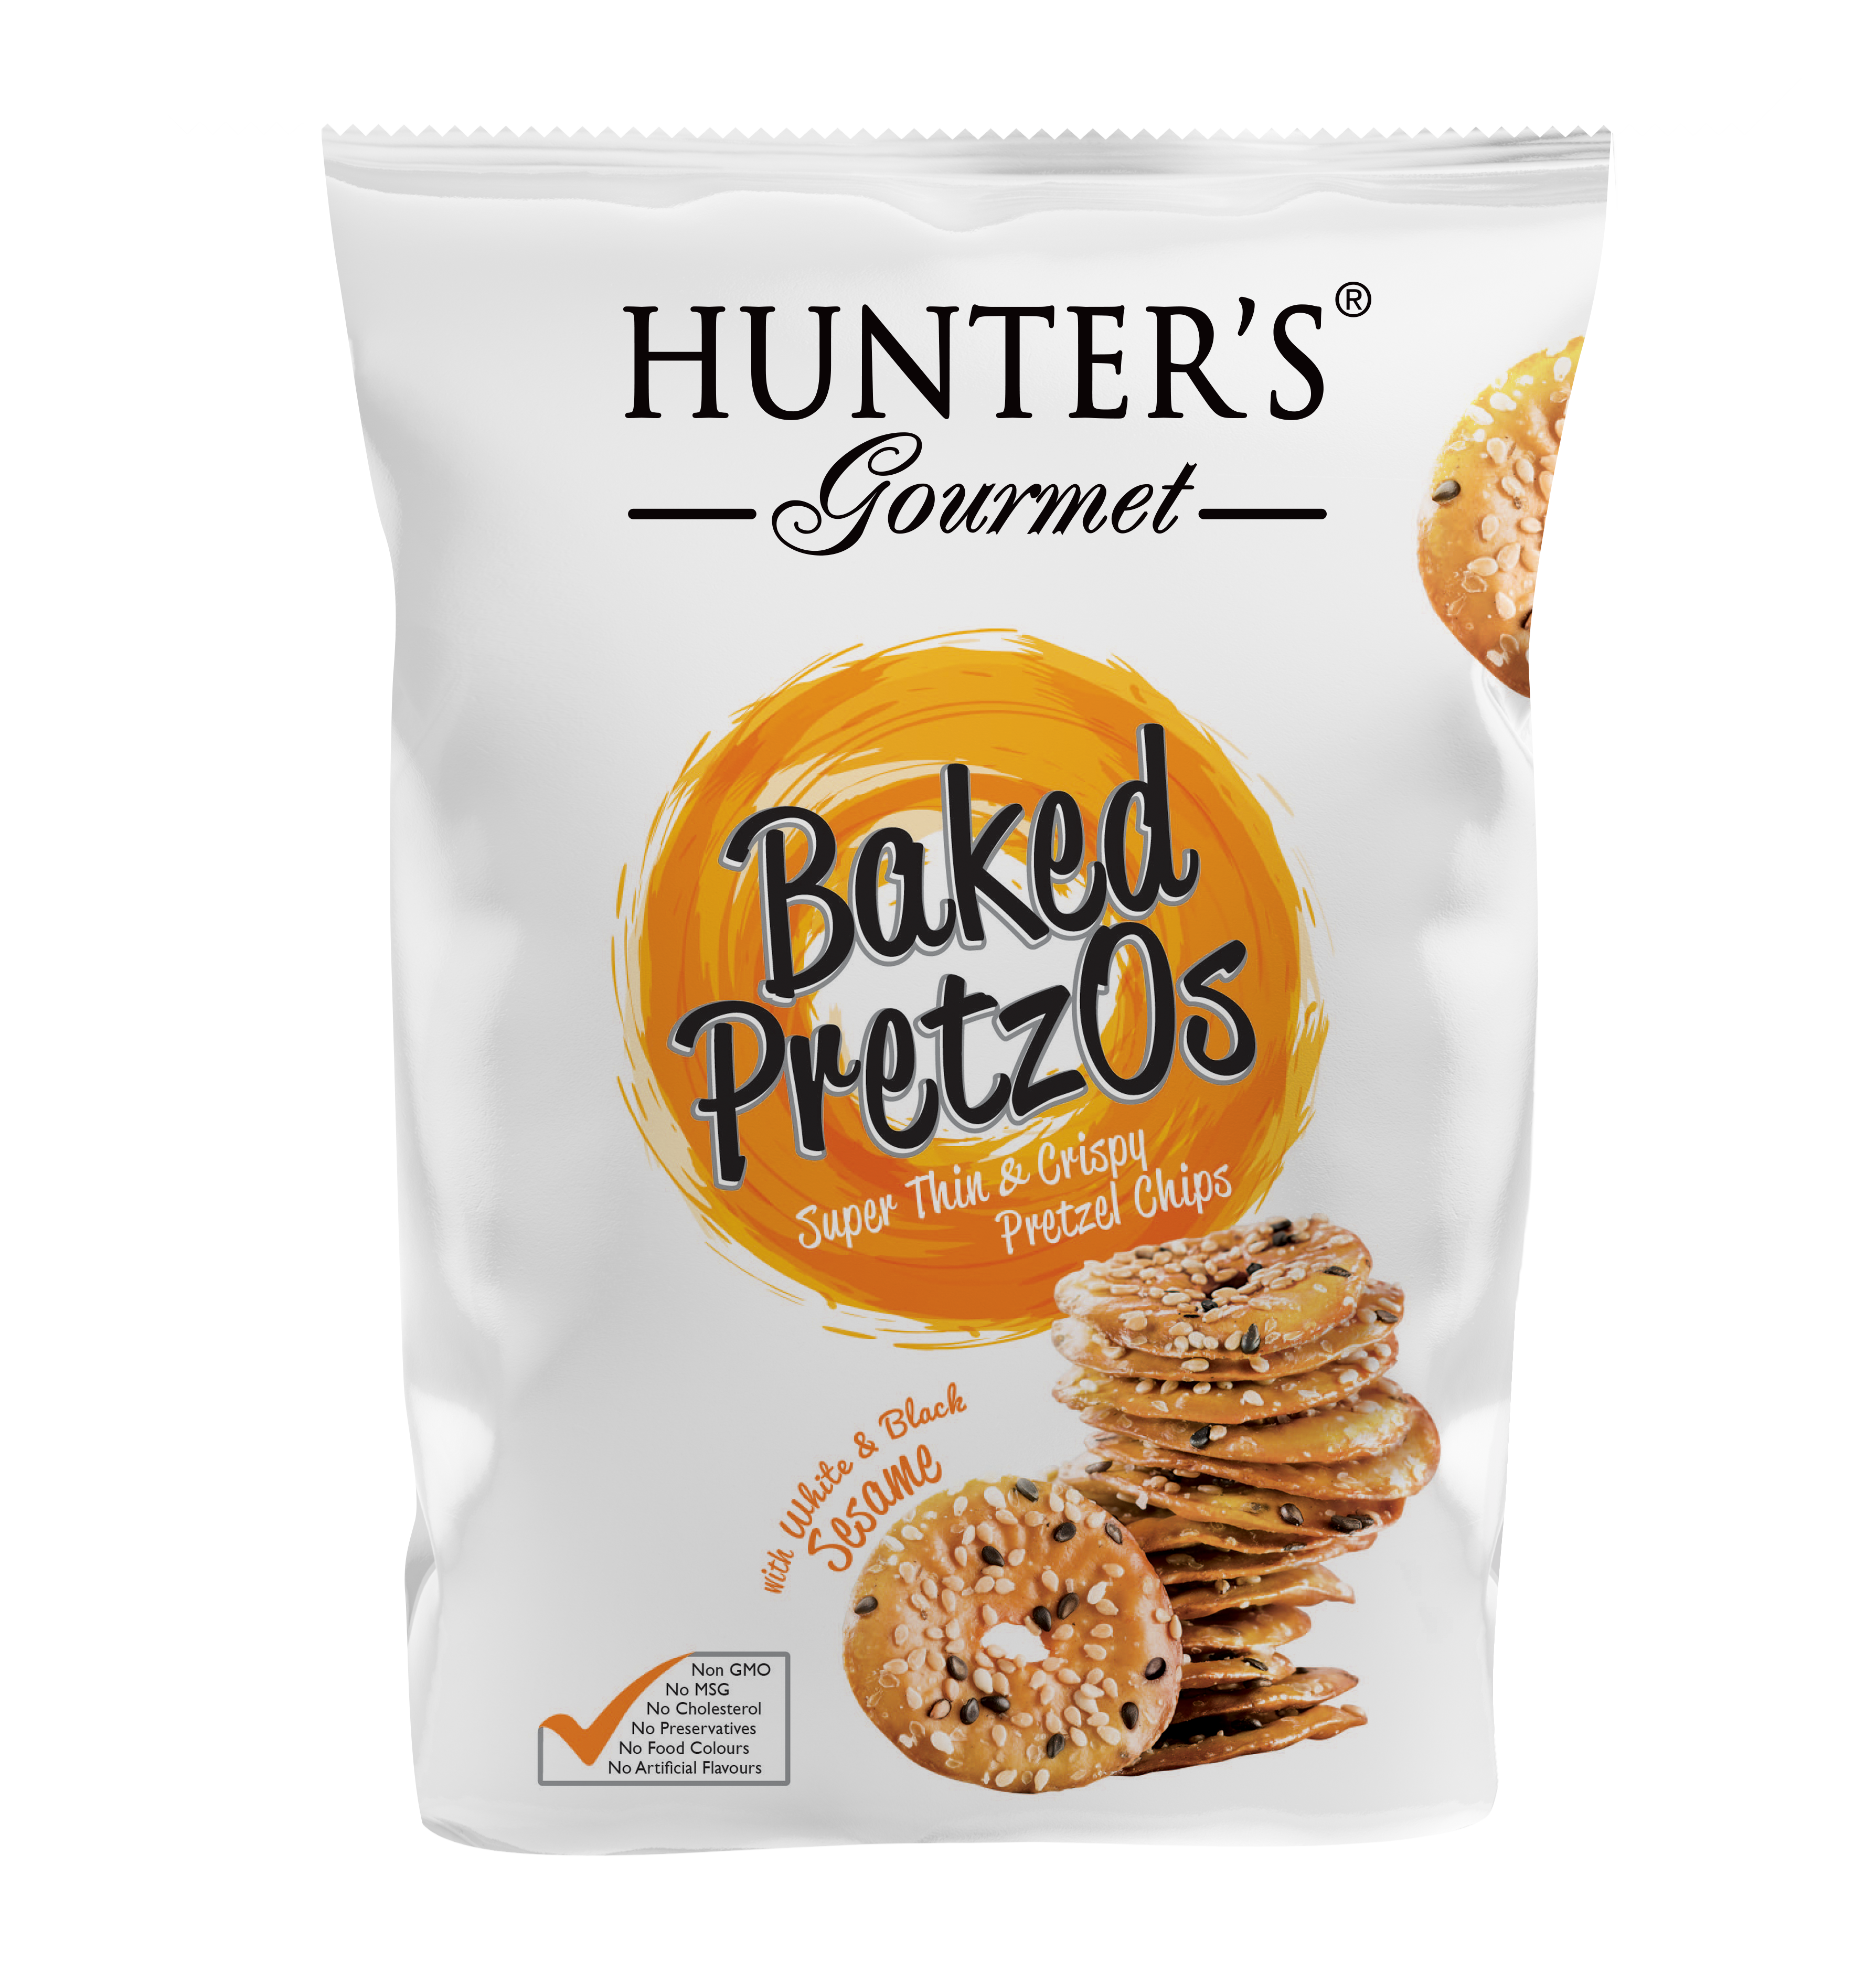 Hunter's Gourmet Baked Pretzos - with White & Black Sesame 12 units per case 180 g